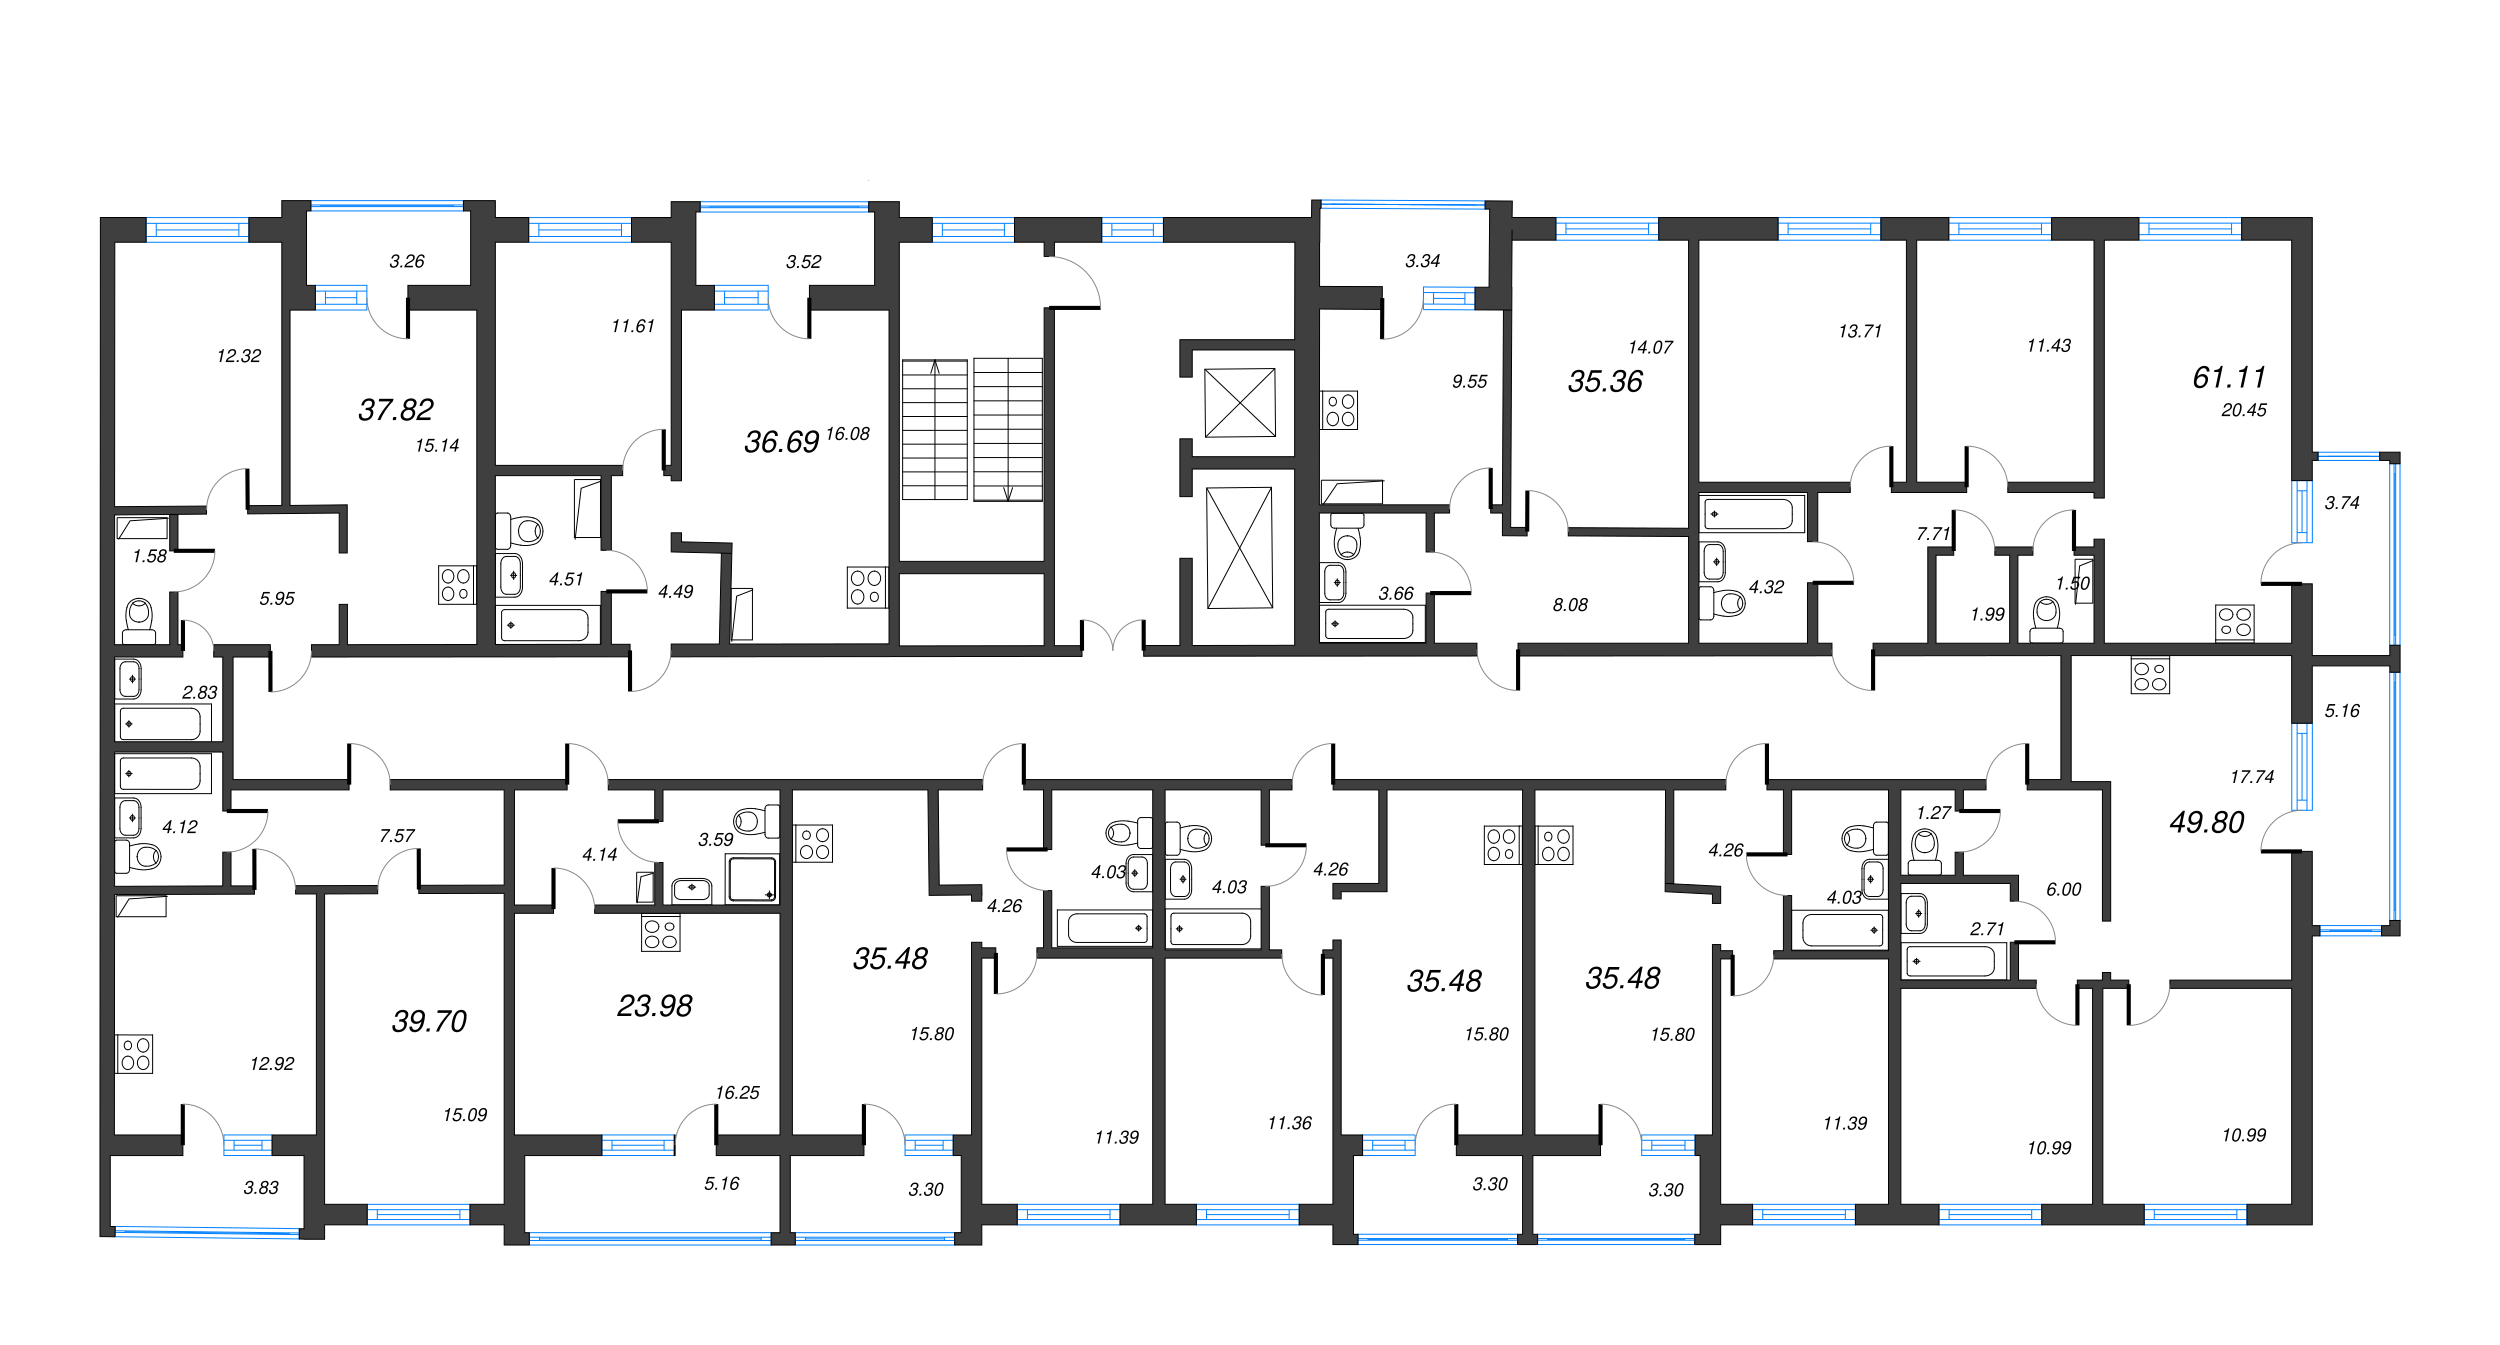 3-комнатная (Евро) квартира, 61.11 м² - планировка этажа